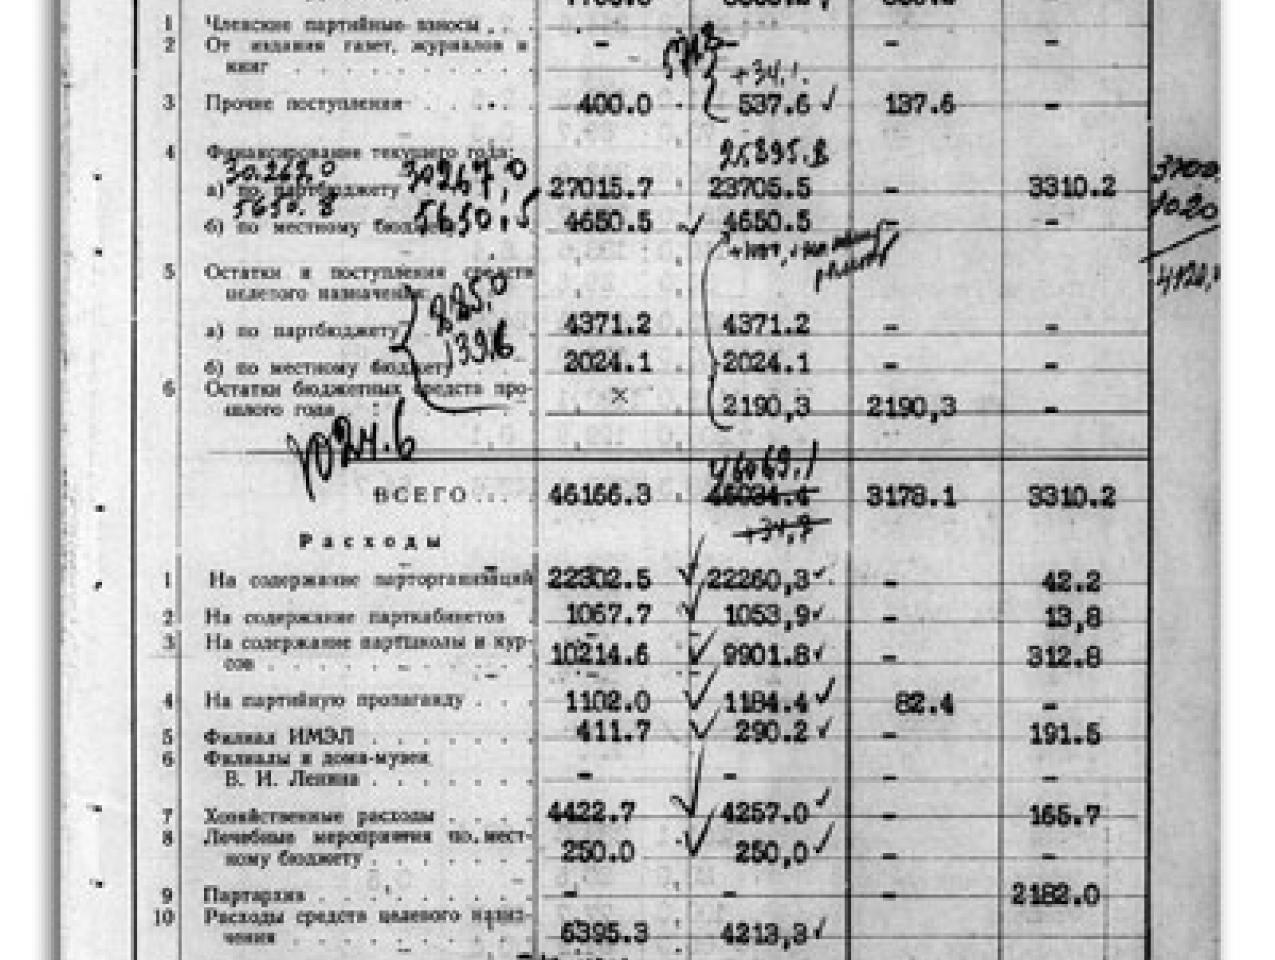 Soviet financial document